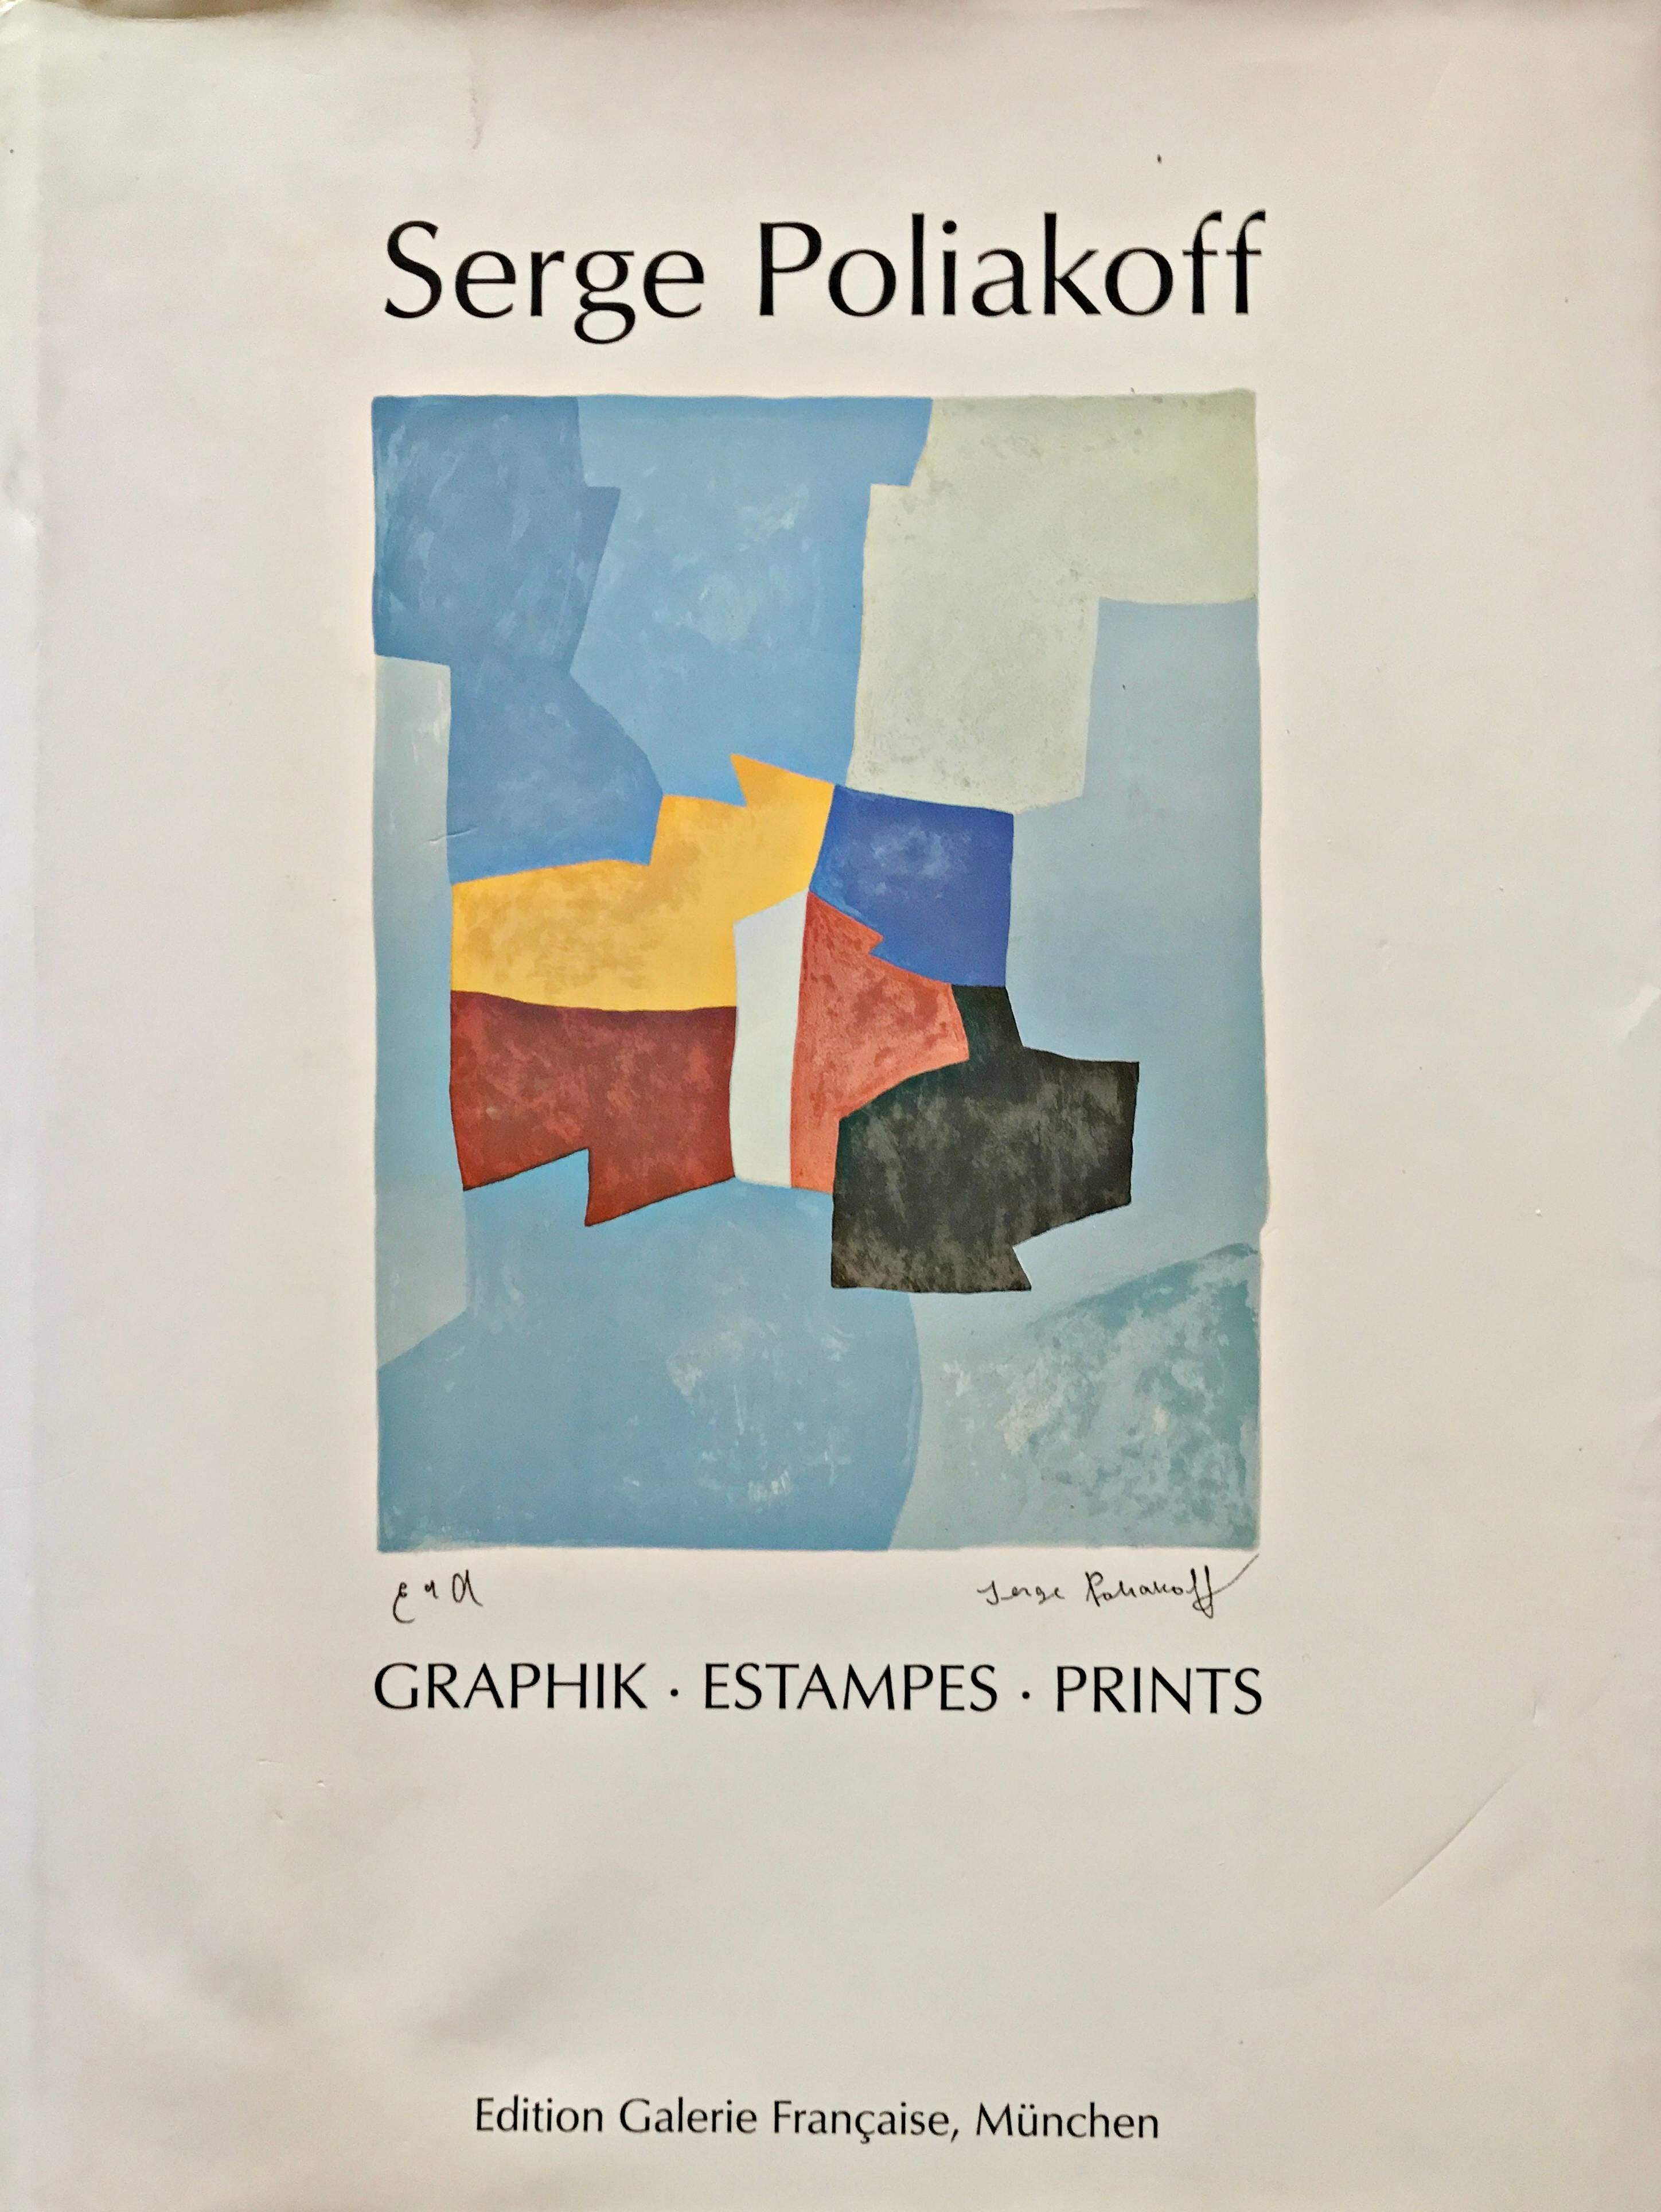 Composition jaune, orange et verte - Abstract Print by Serge Poliakoff